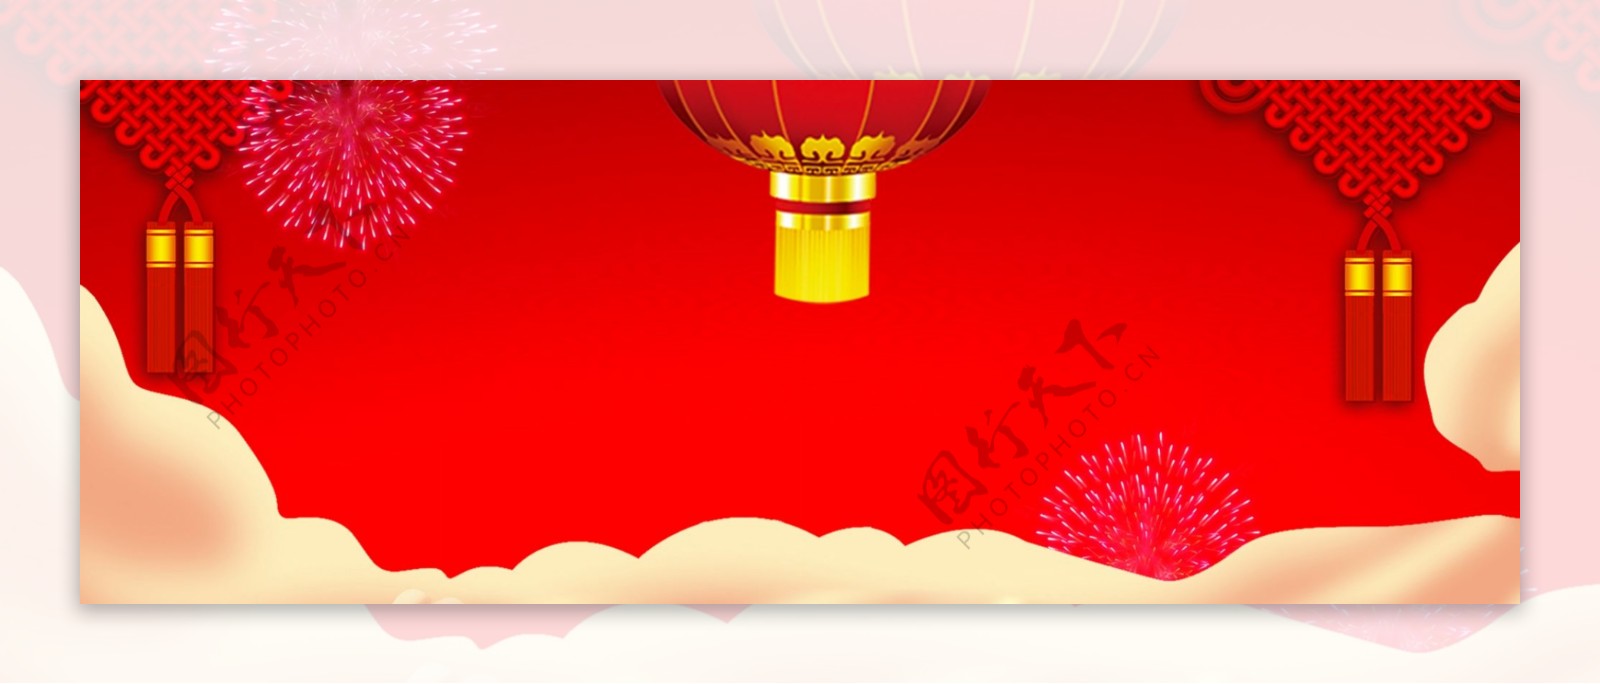 舞狮中国风新年节日banner背景